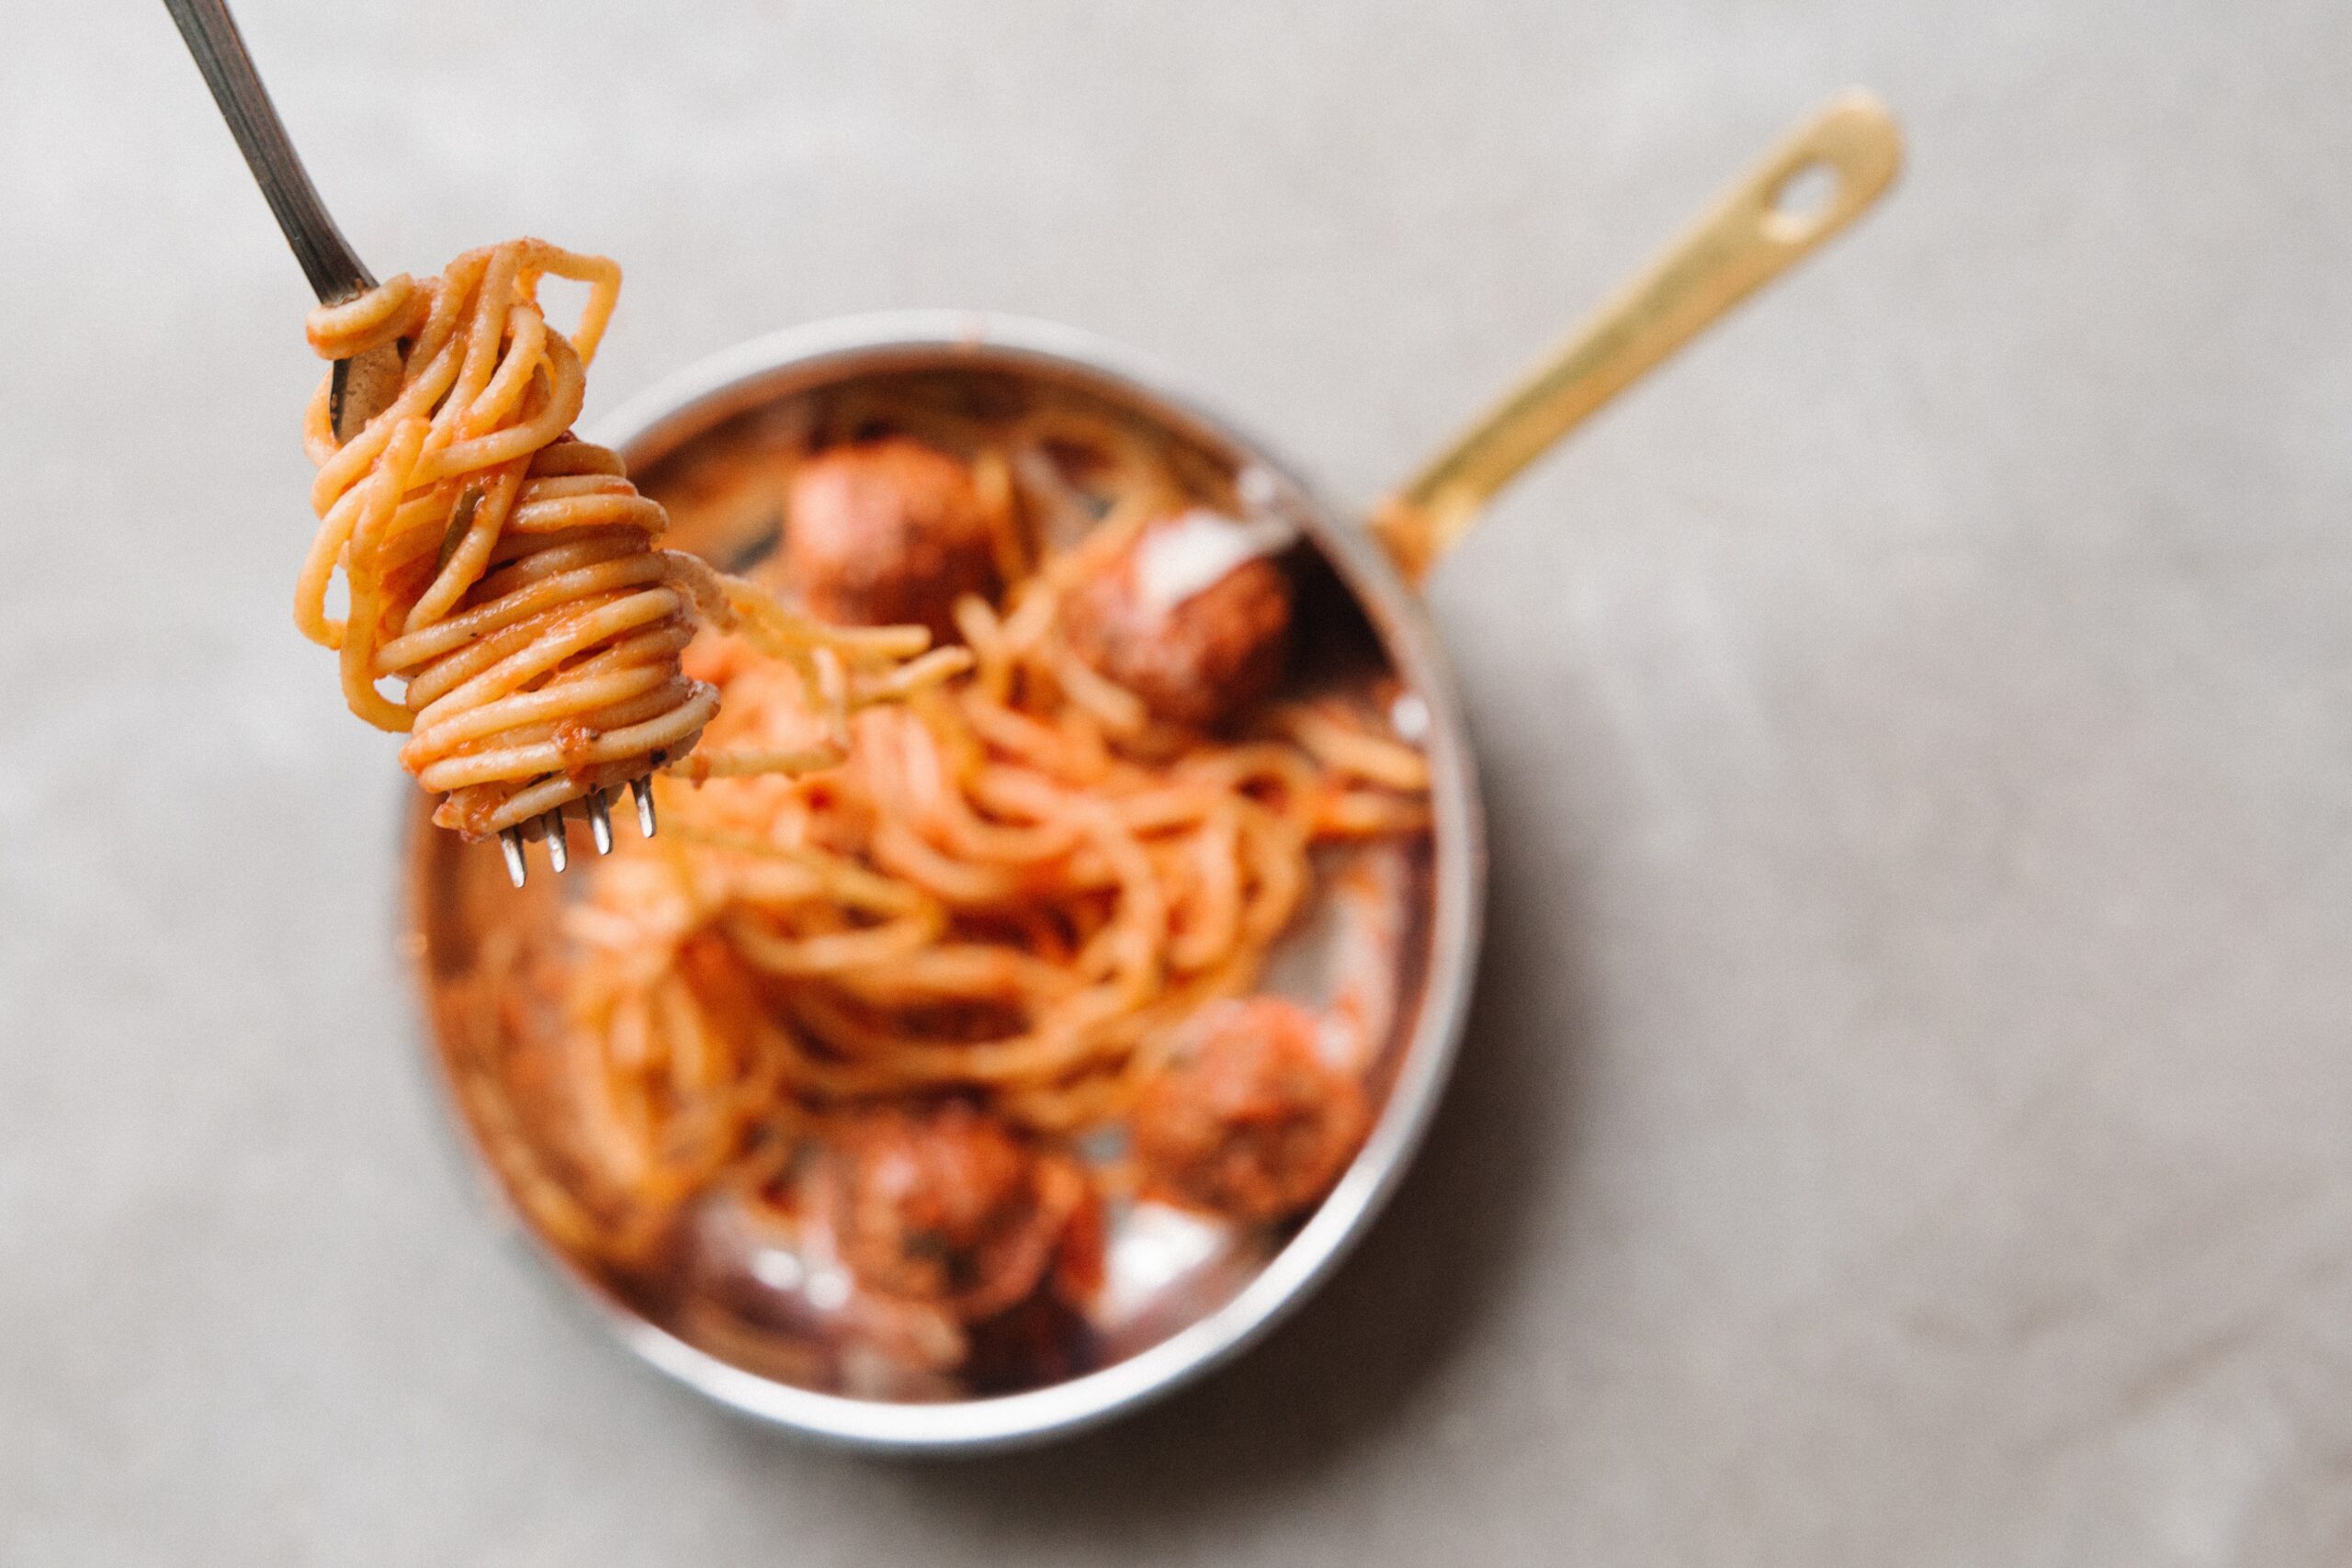 Spaghetti with marinara and meatballs